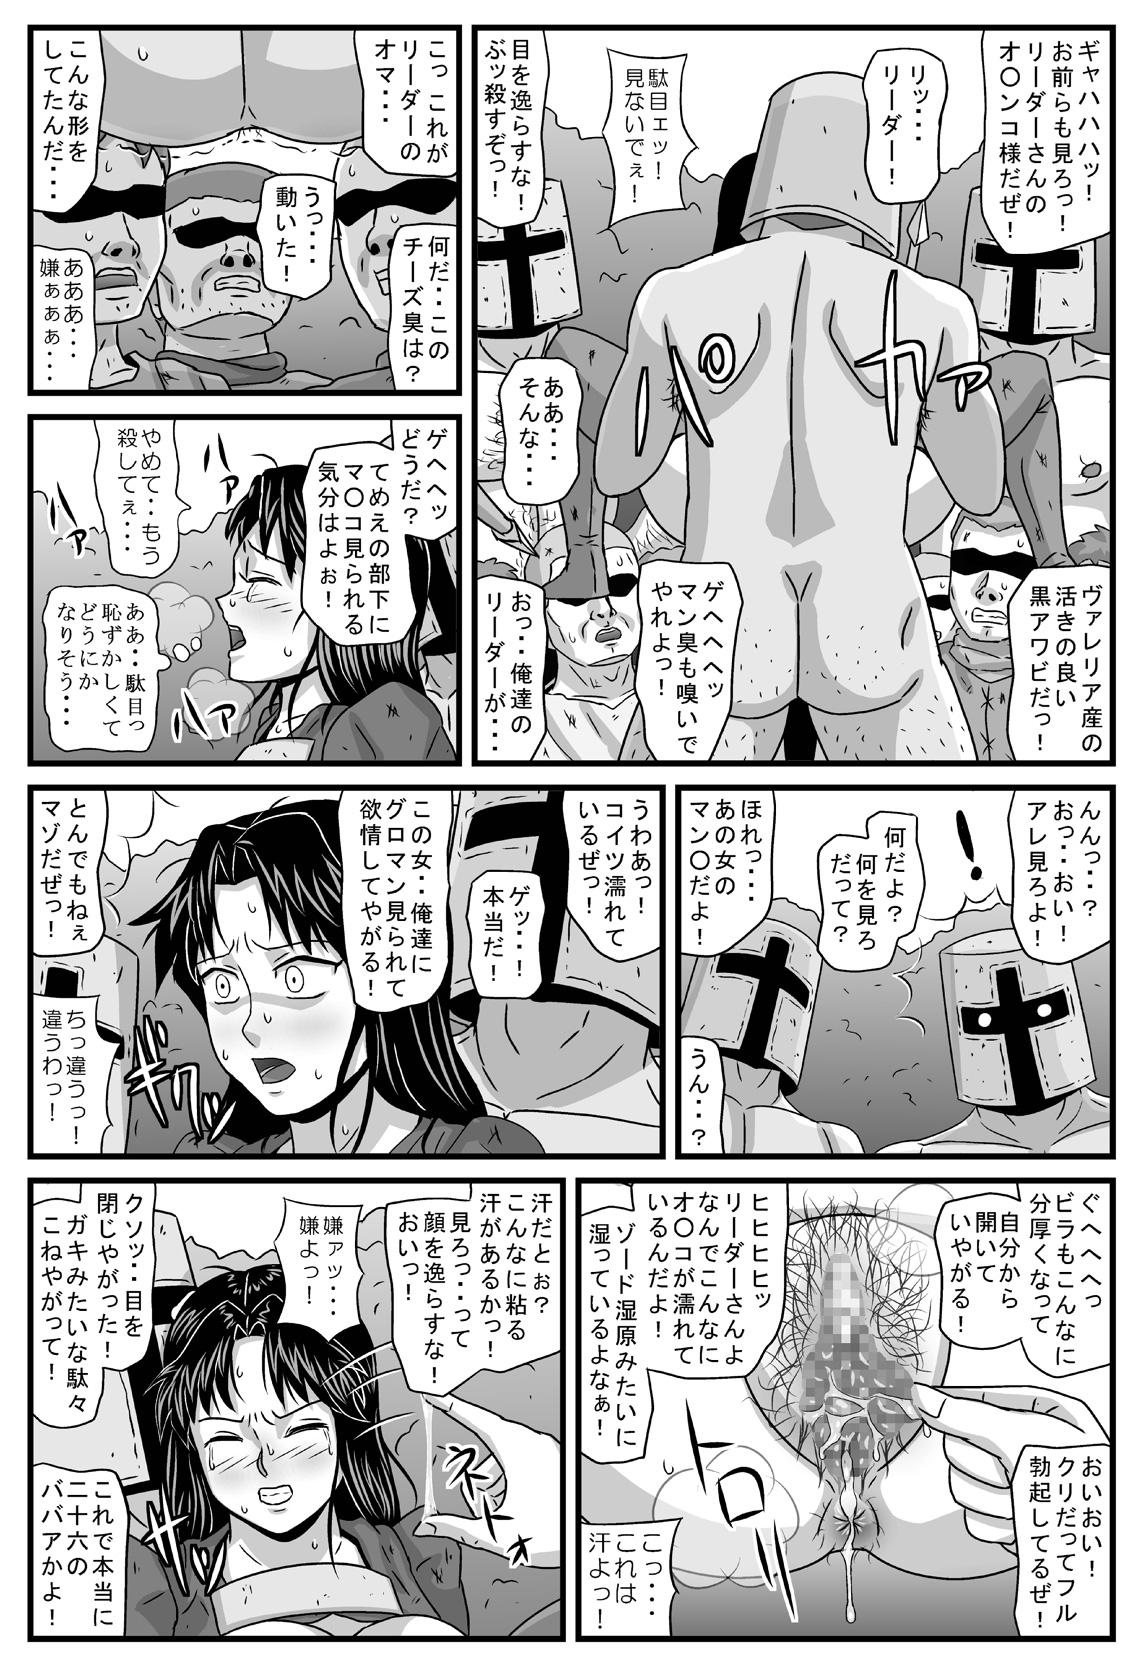 Olderwoman Guerrilla no Onna Leader wa Honoo no 26-sai Kurokami Shojo - Tactics ogre Naked - Page 8